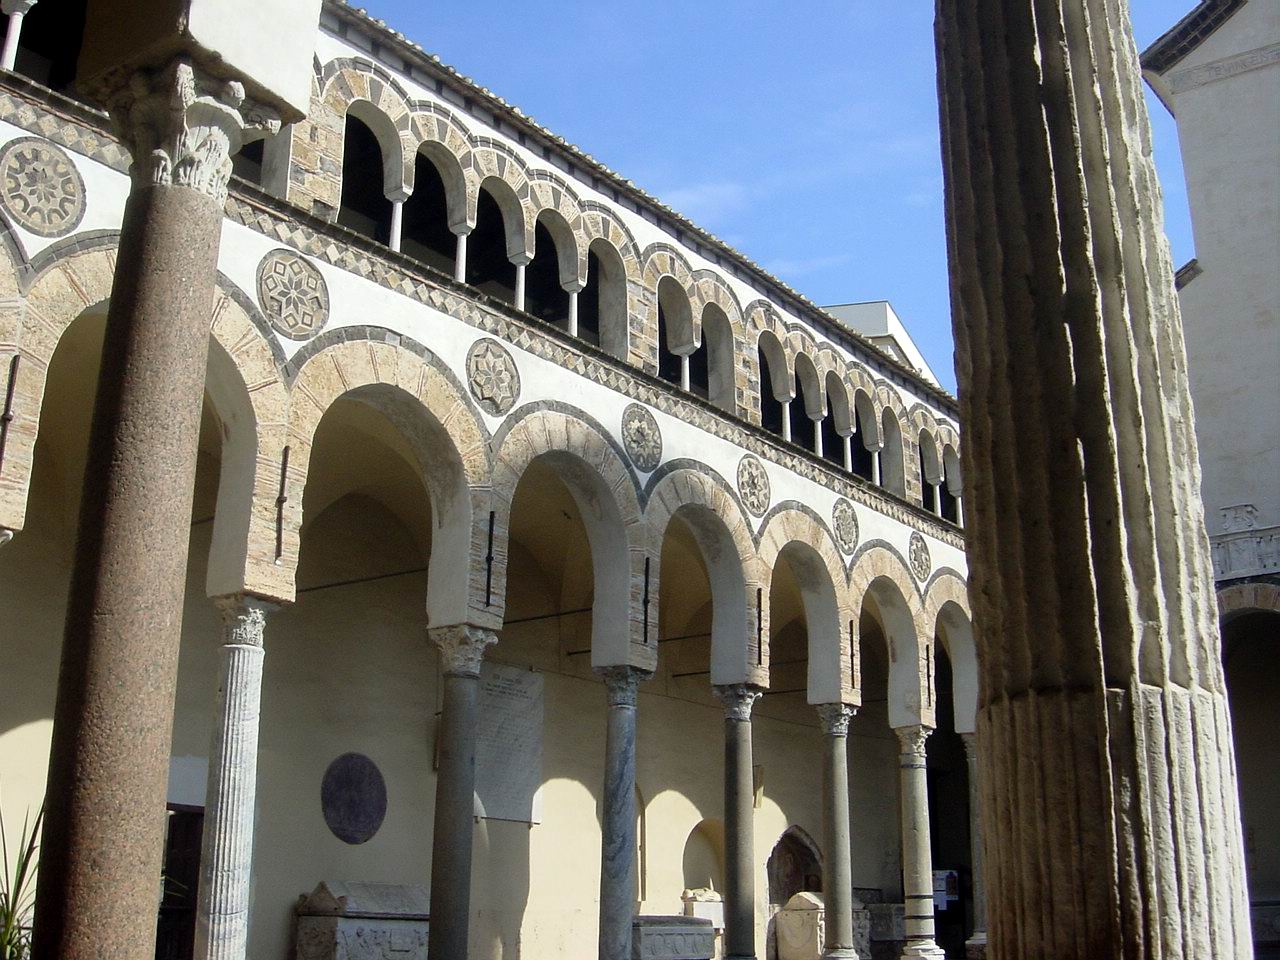 
  
    
      
      
          
Atrio quadriportico Duomo Salerno

    
  
          
